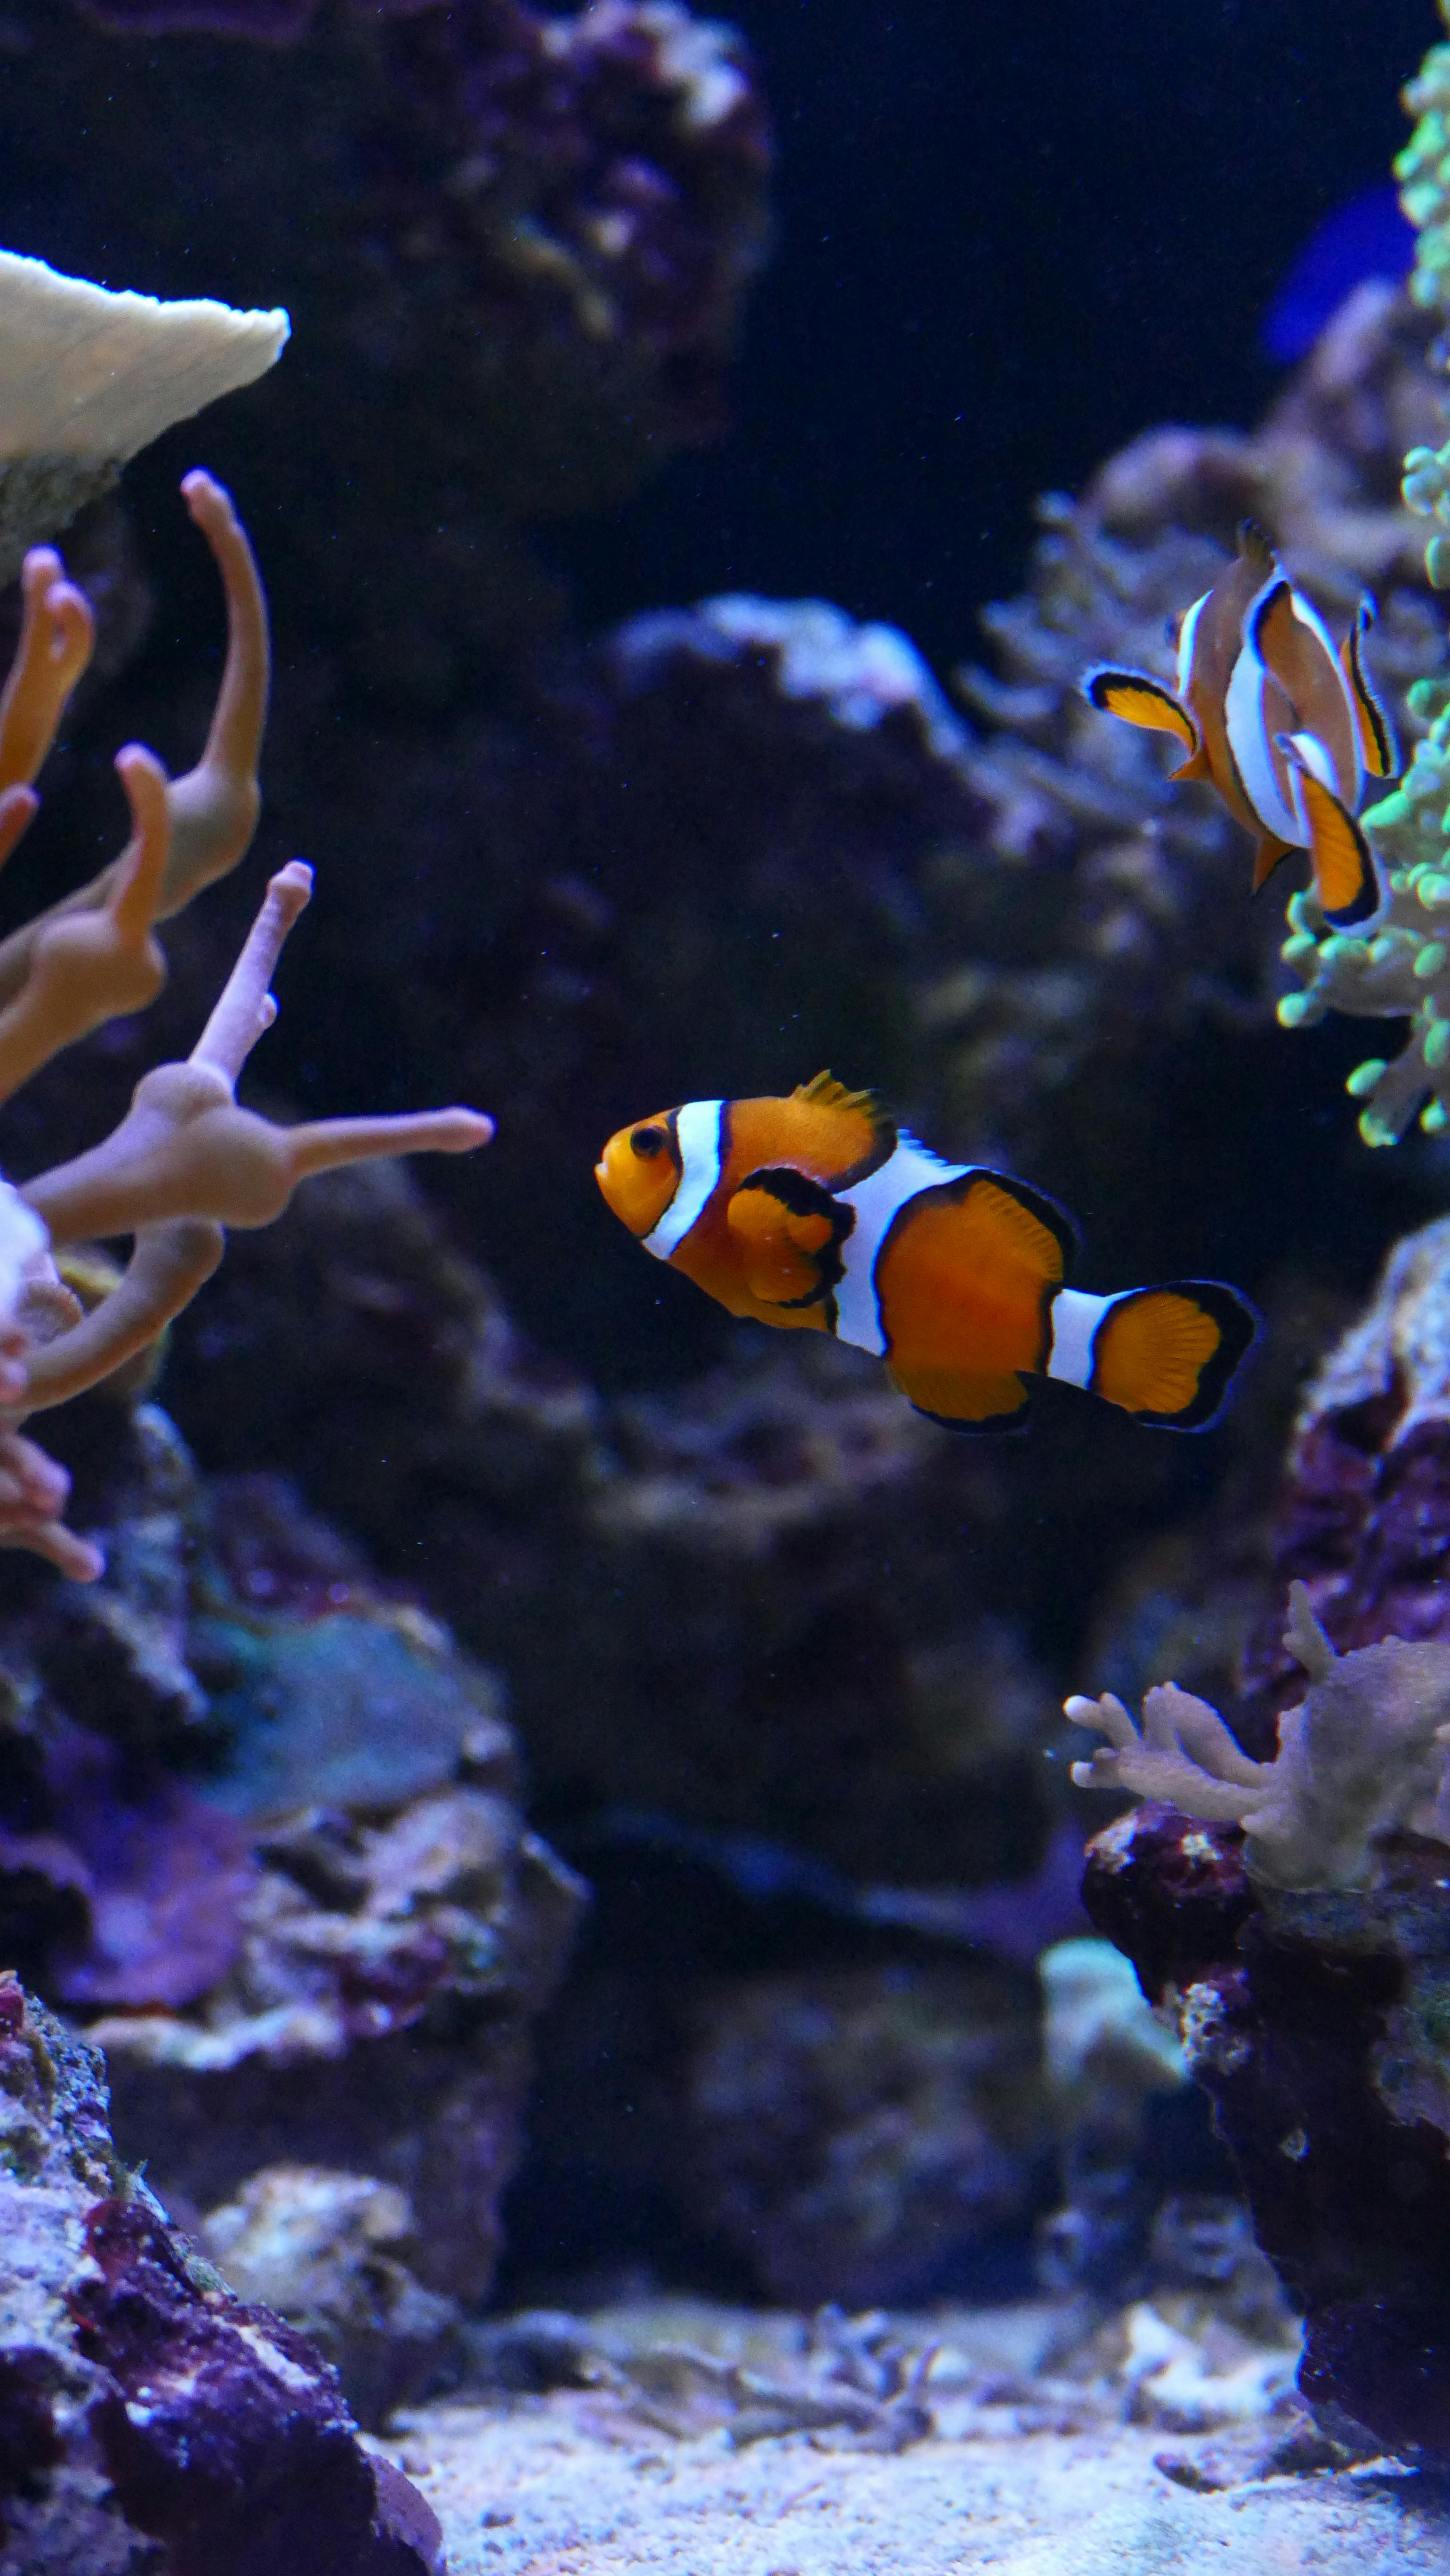 School Of Clownfish Harem Underwater Coral Reef 4K 5K HD Fish Wallpapers   HD Wallpapers  ID 107434